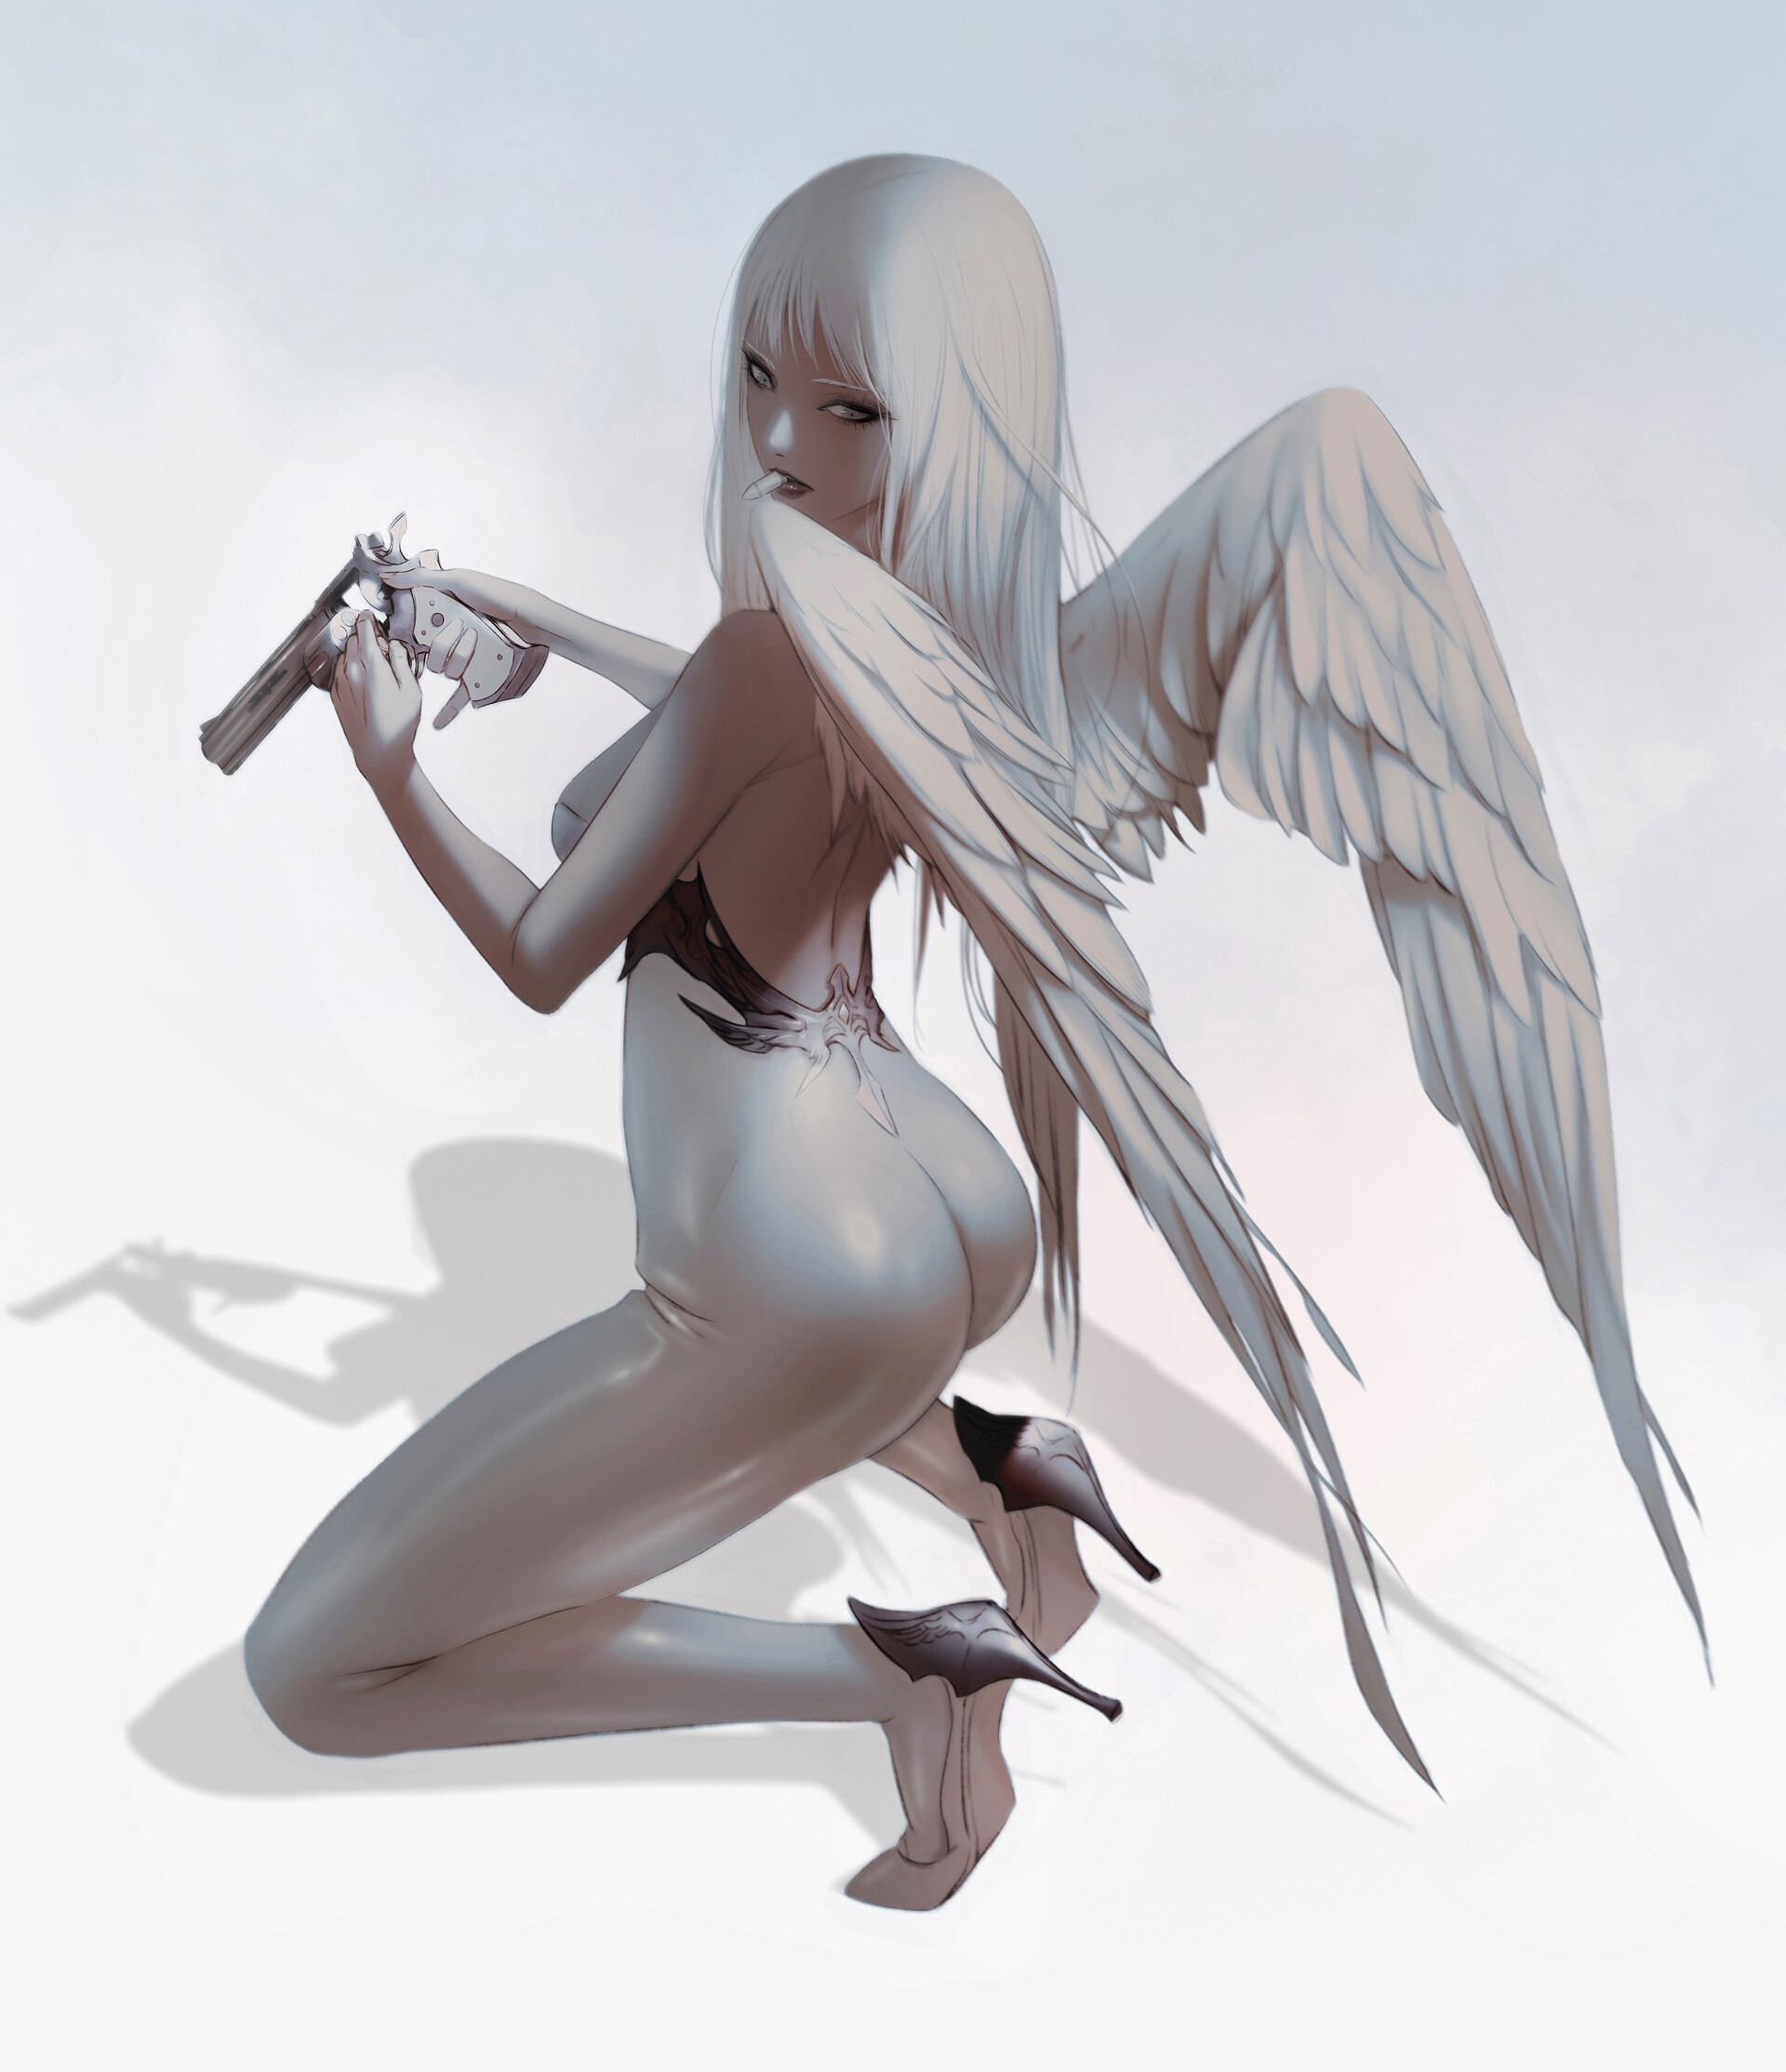 General 1920x2228 Lee jung-Myung drawing women silver hair long hair angel wings kneeling ass high heels white clothing weapon pistol revolver shadow